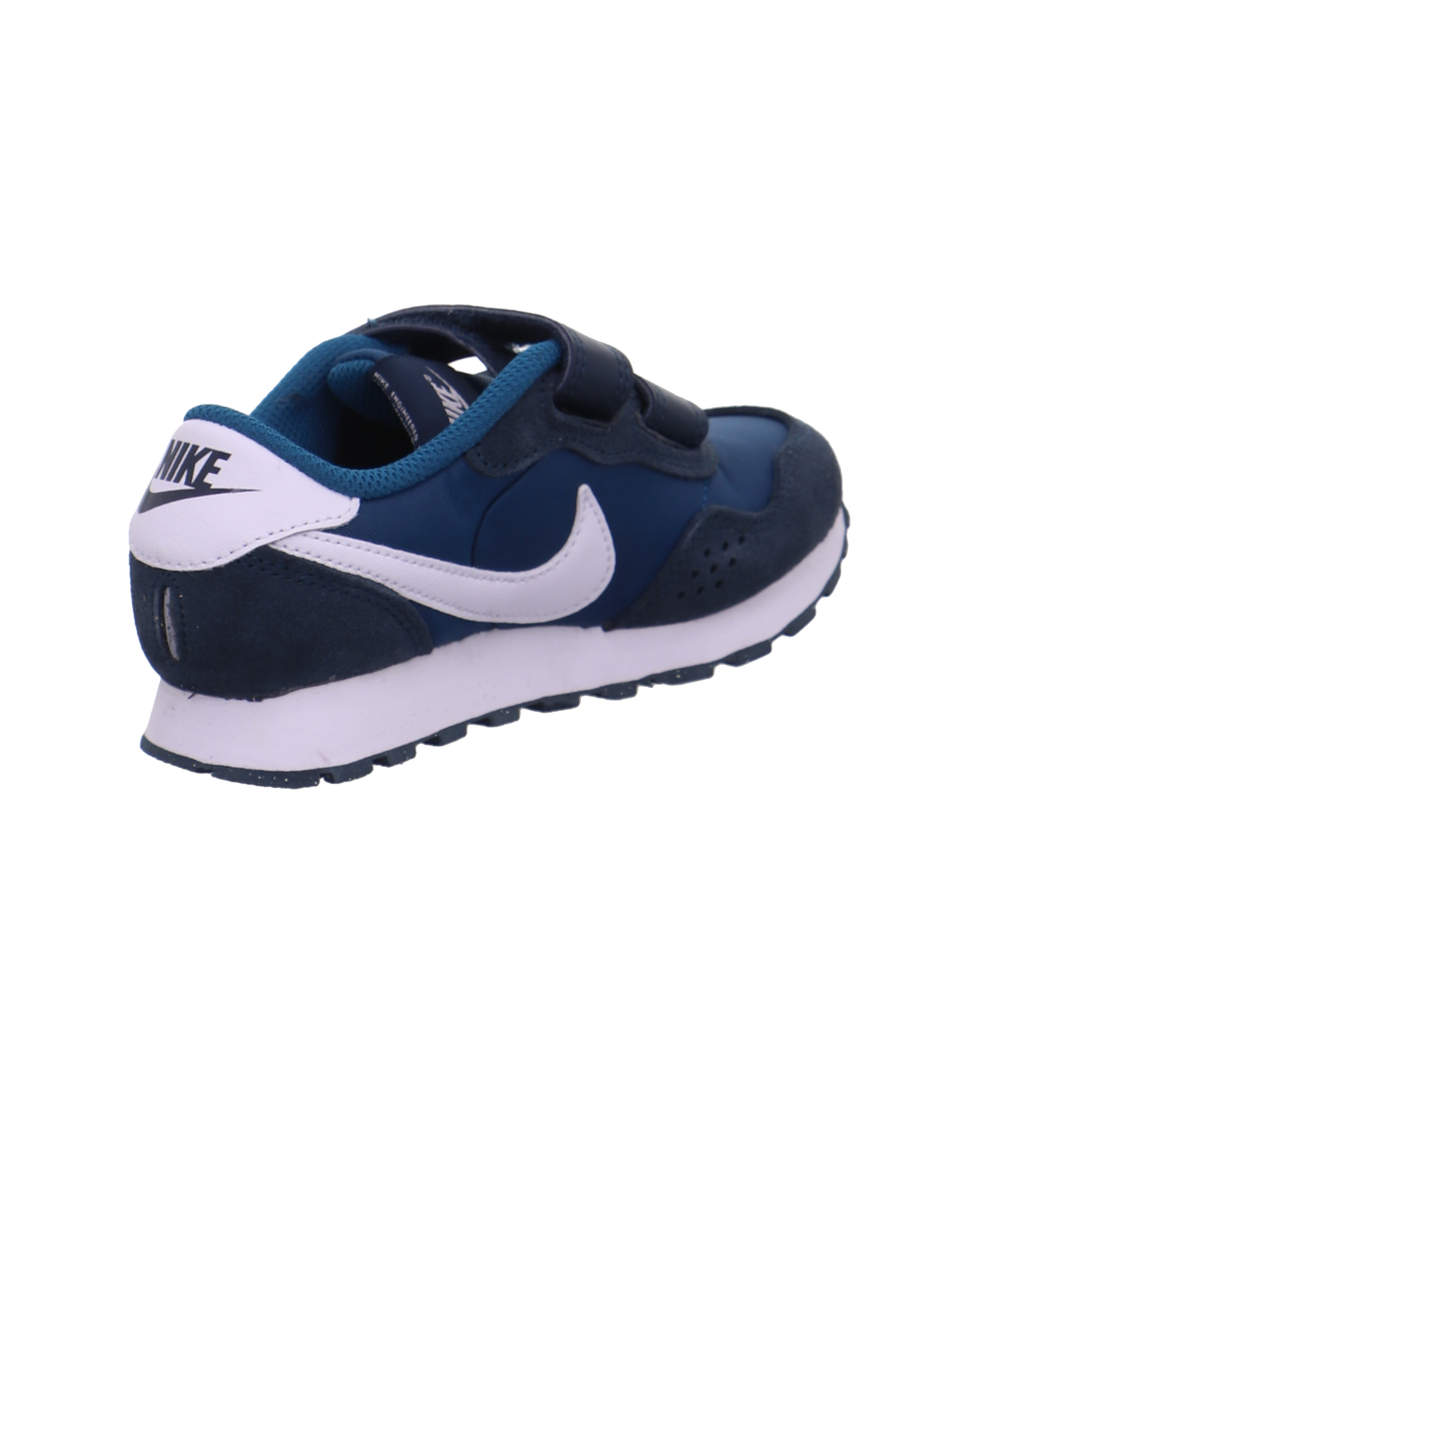 Nike Halbschuhe blau kombi Bild5